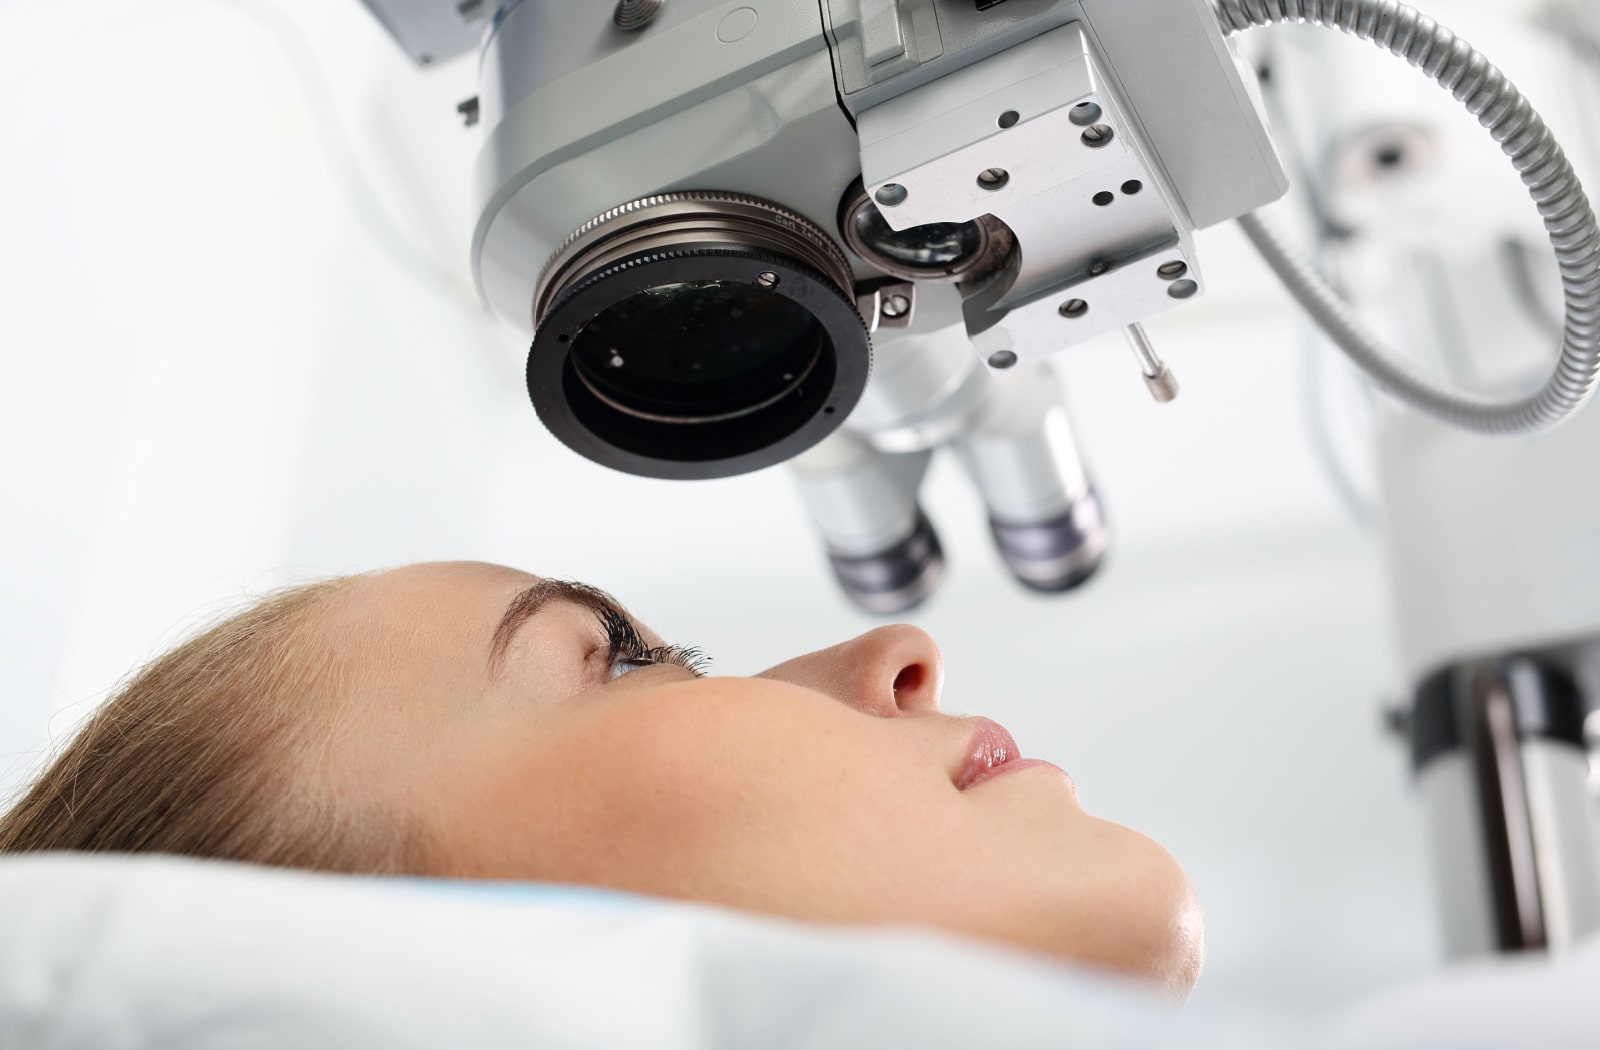 A female patient prepares for laser eye surgery